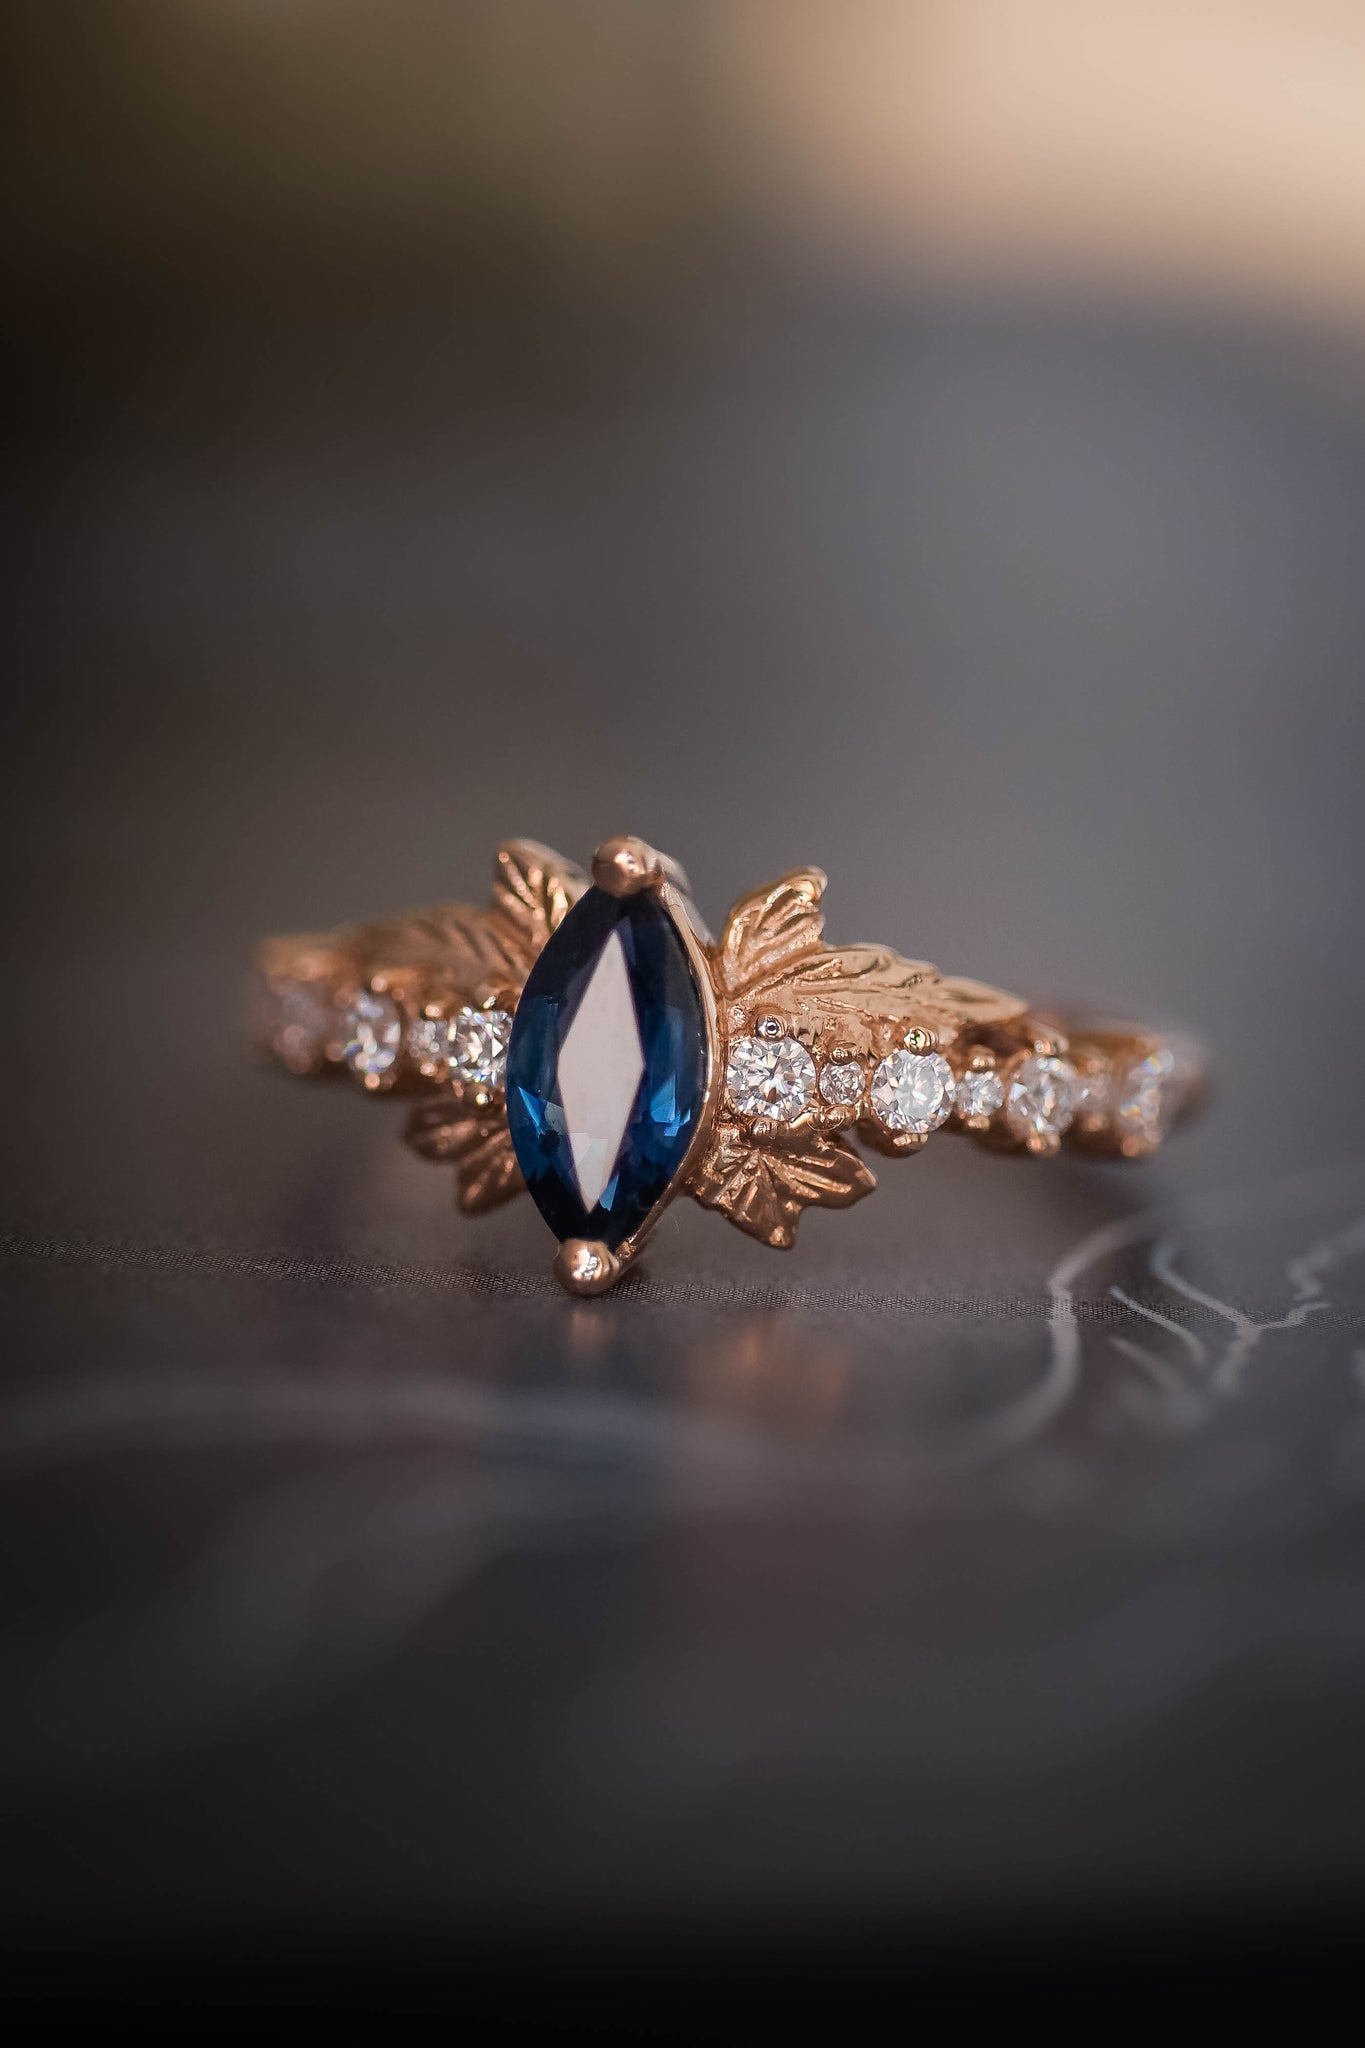 Sapphire engagement ring with diamonds / Verbena - Eden Garden Jewelry™